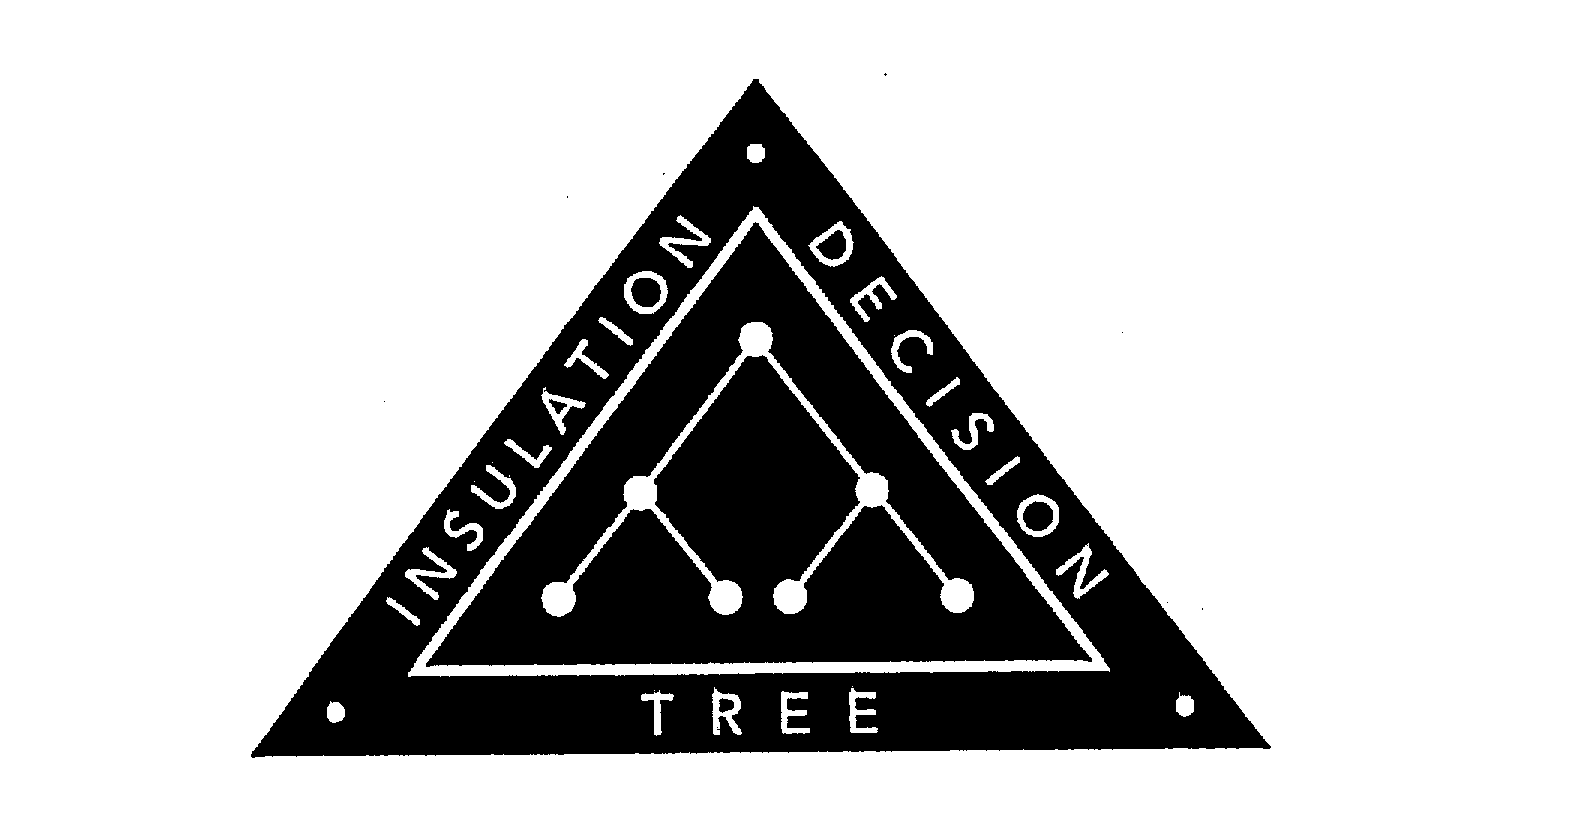  INSULATION DECISION TREE